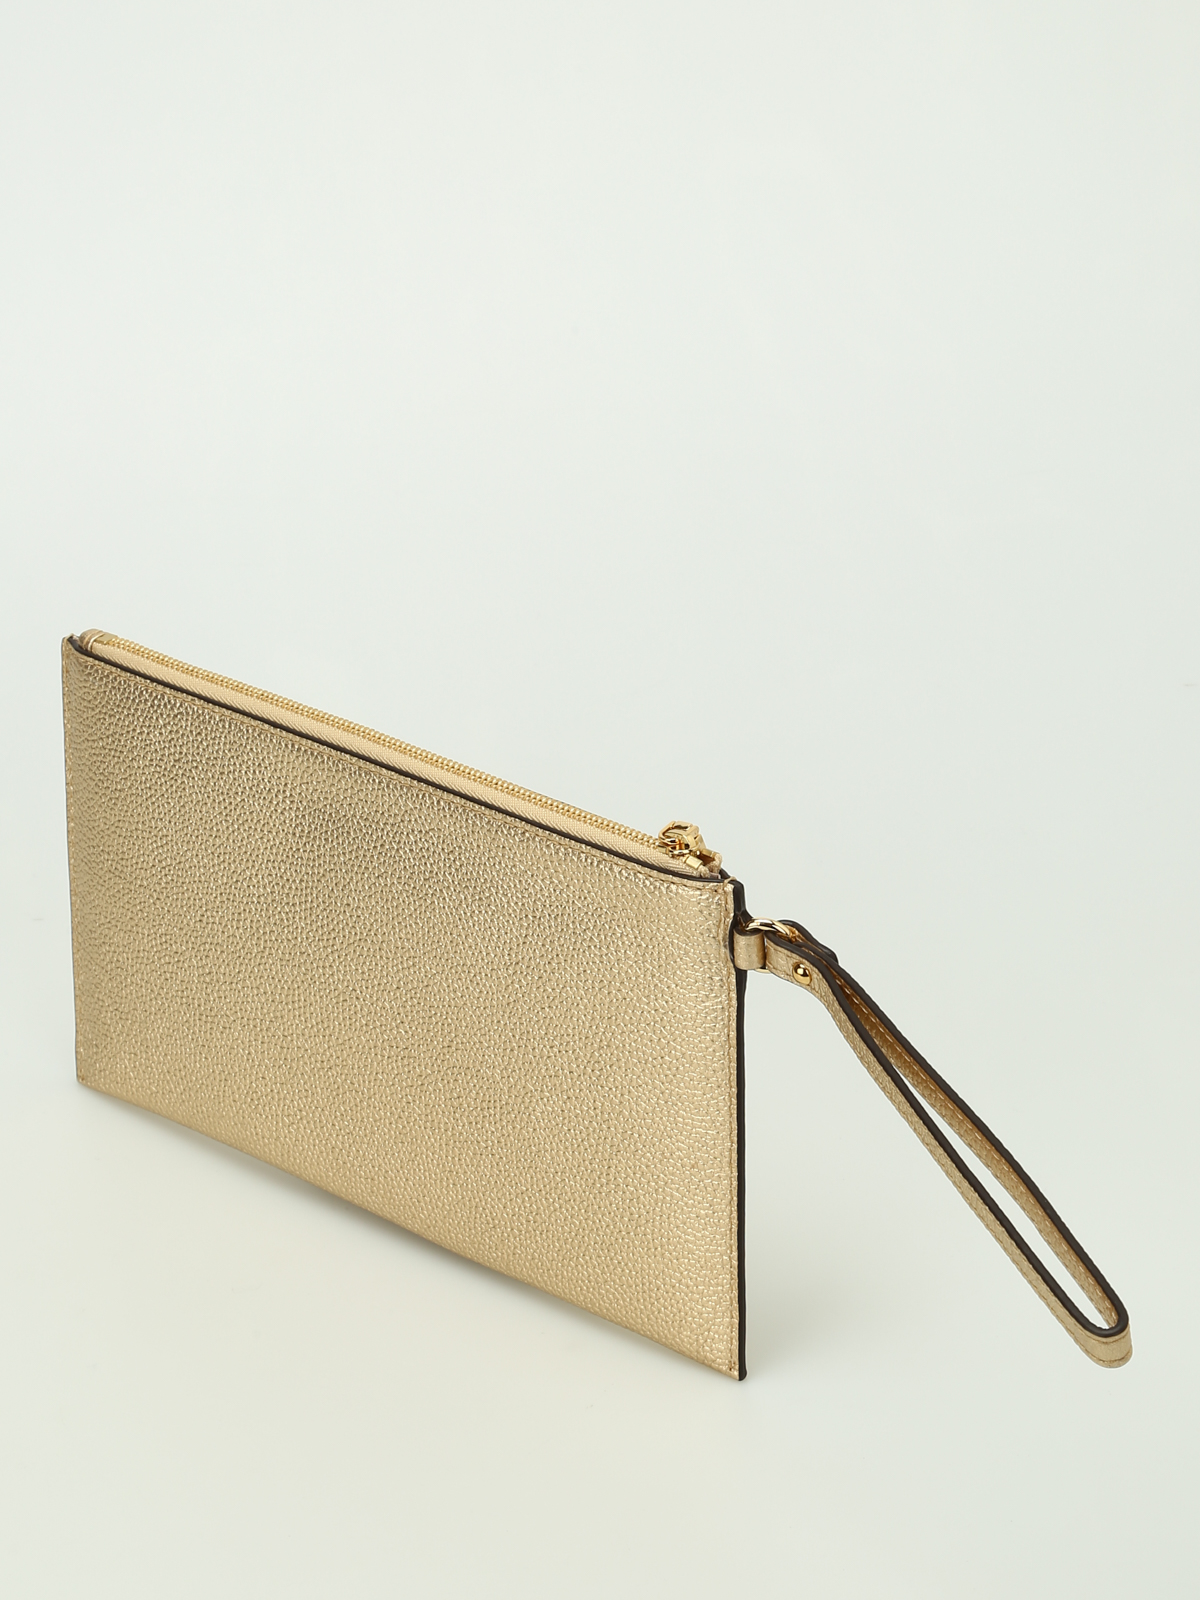 Michael Kors - Wristlet gold flat purse 